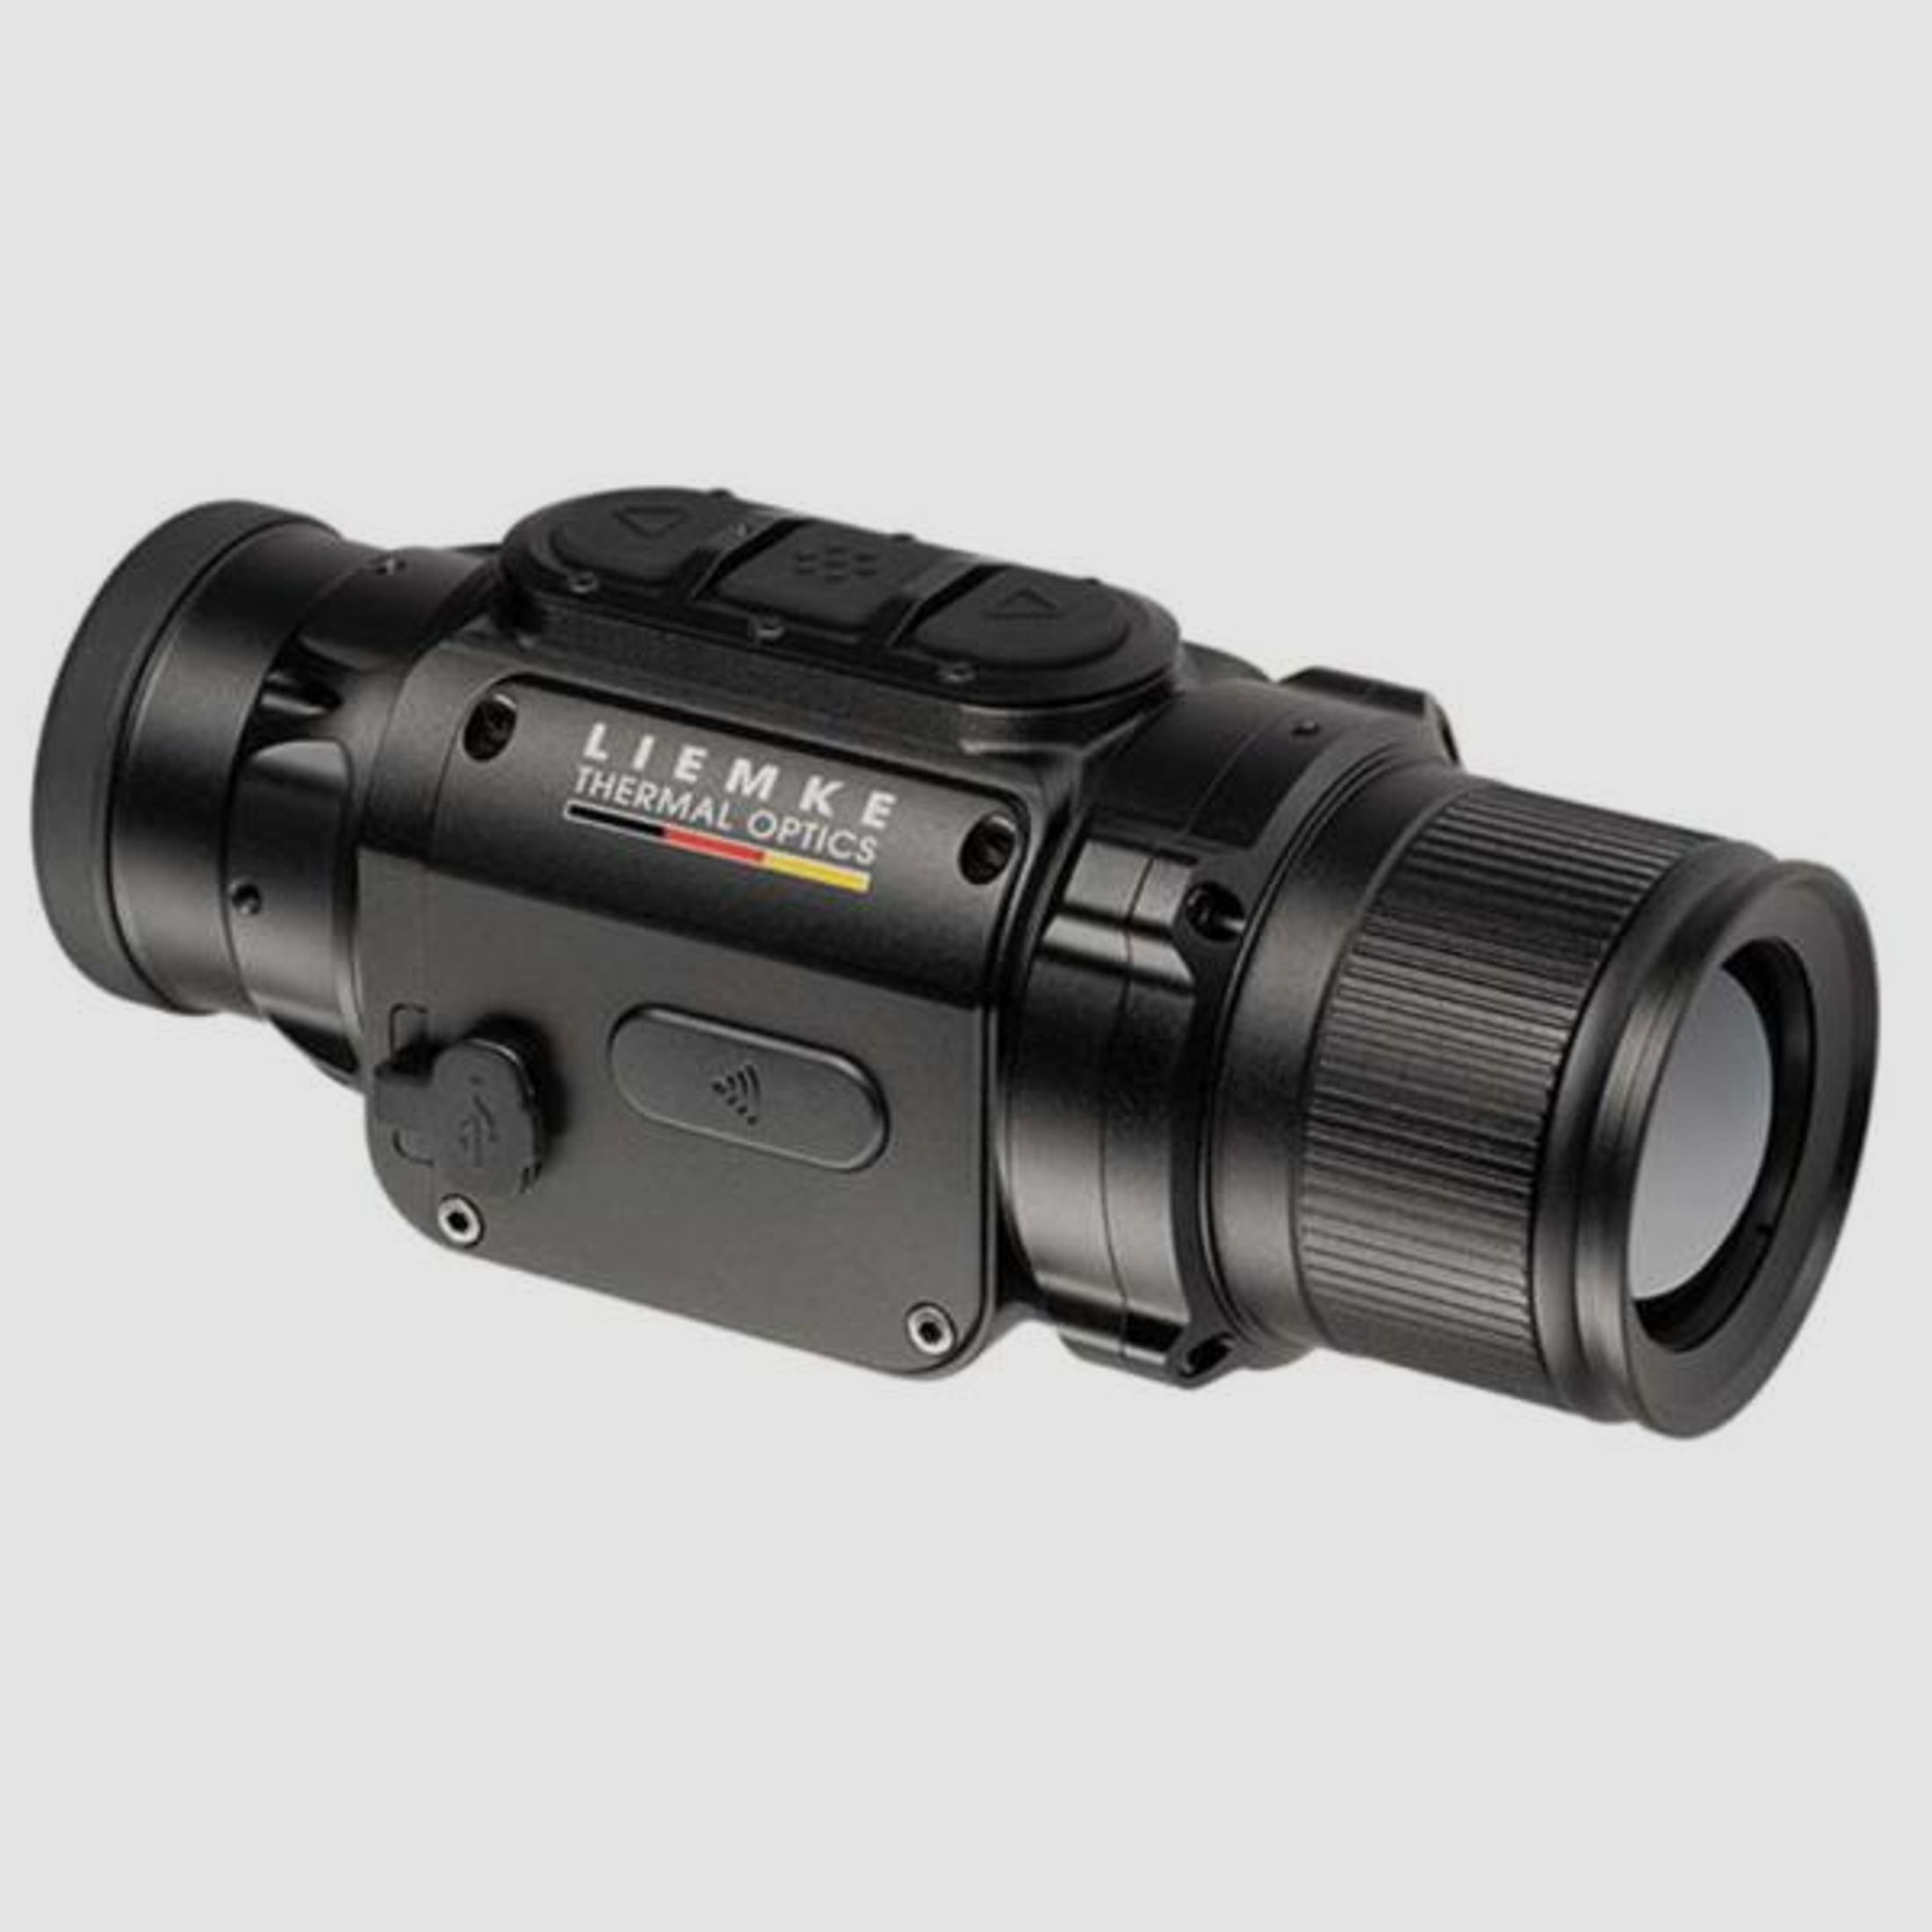 LIEMKE Optik Wärmebild-Kamera Luchs -1 Dual-Use - Vorsatzgerät